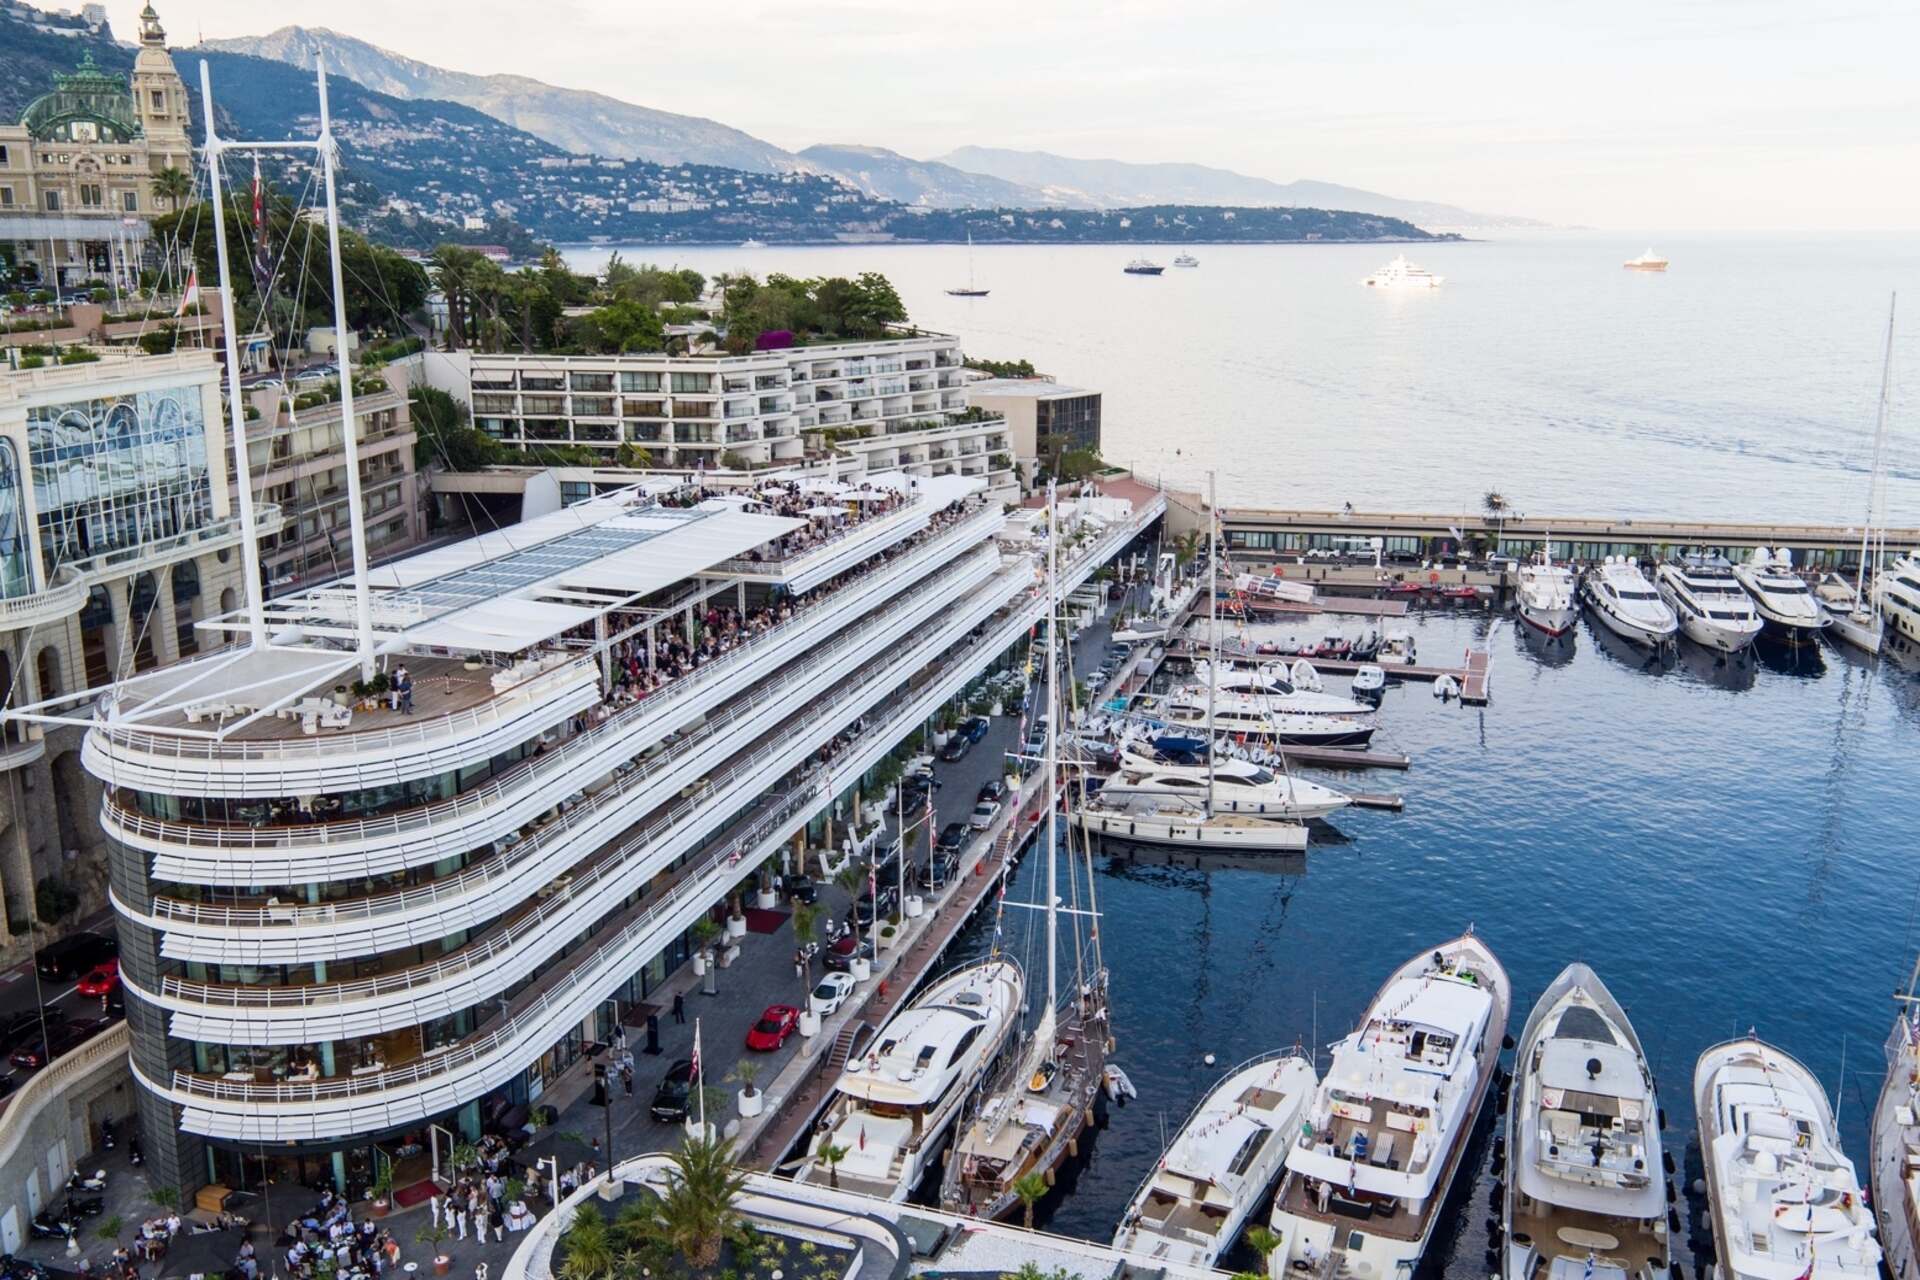 "Monaco et Suisse Investment Forum" განკუთვნილია უძრავი ქონების სექტორის კომპანიებისა და პროფესიონალებისთვის